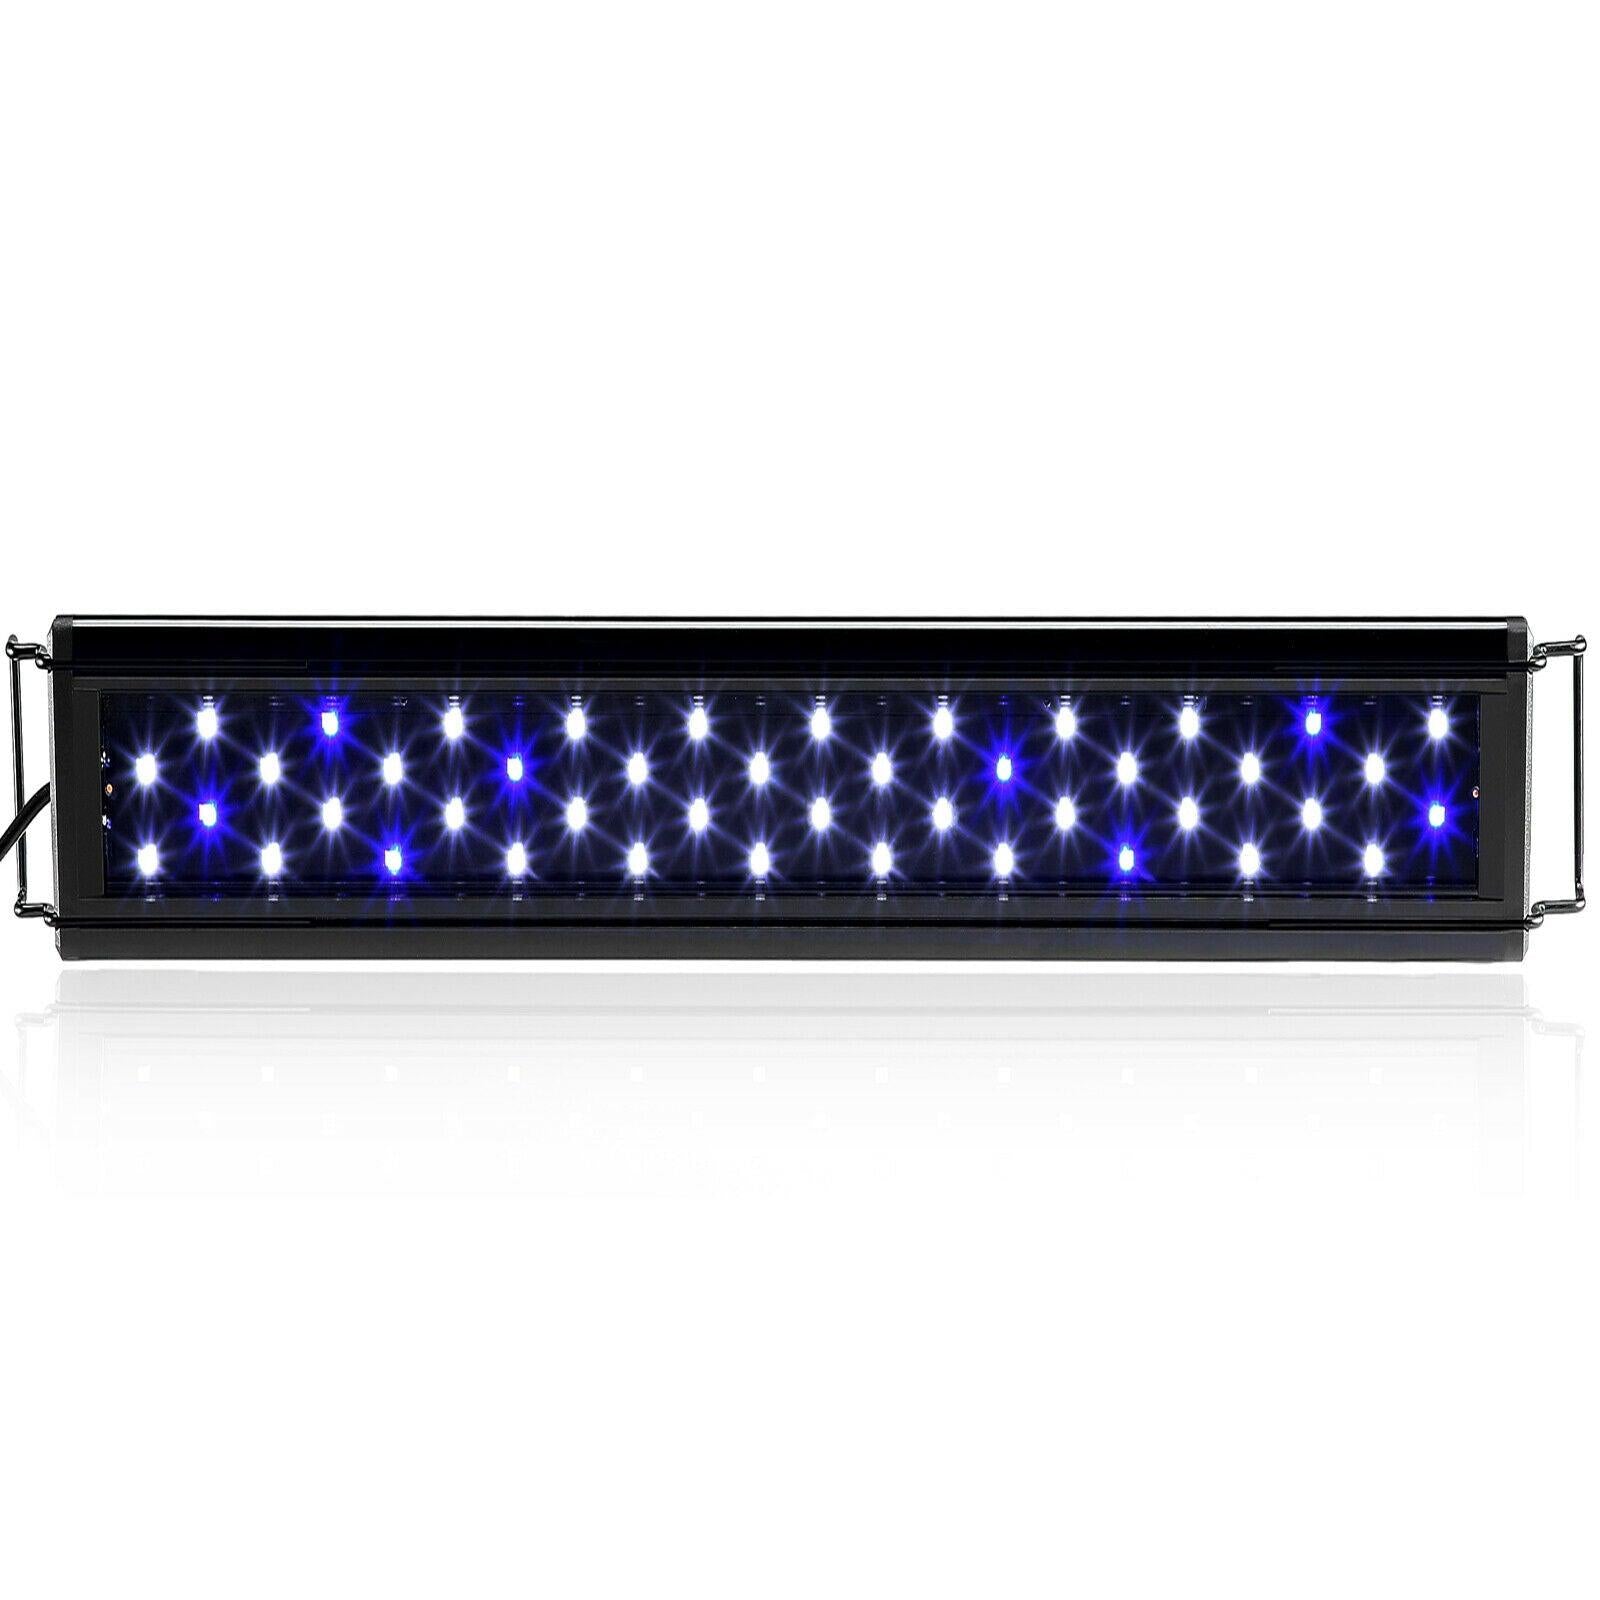 AQUANEAT Aquarium LED Light Marine FOWLR Blue & White 12 20 24 30 36 48 Inch - Etyn Online {{ product_tag }}